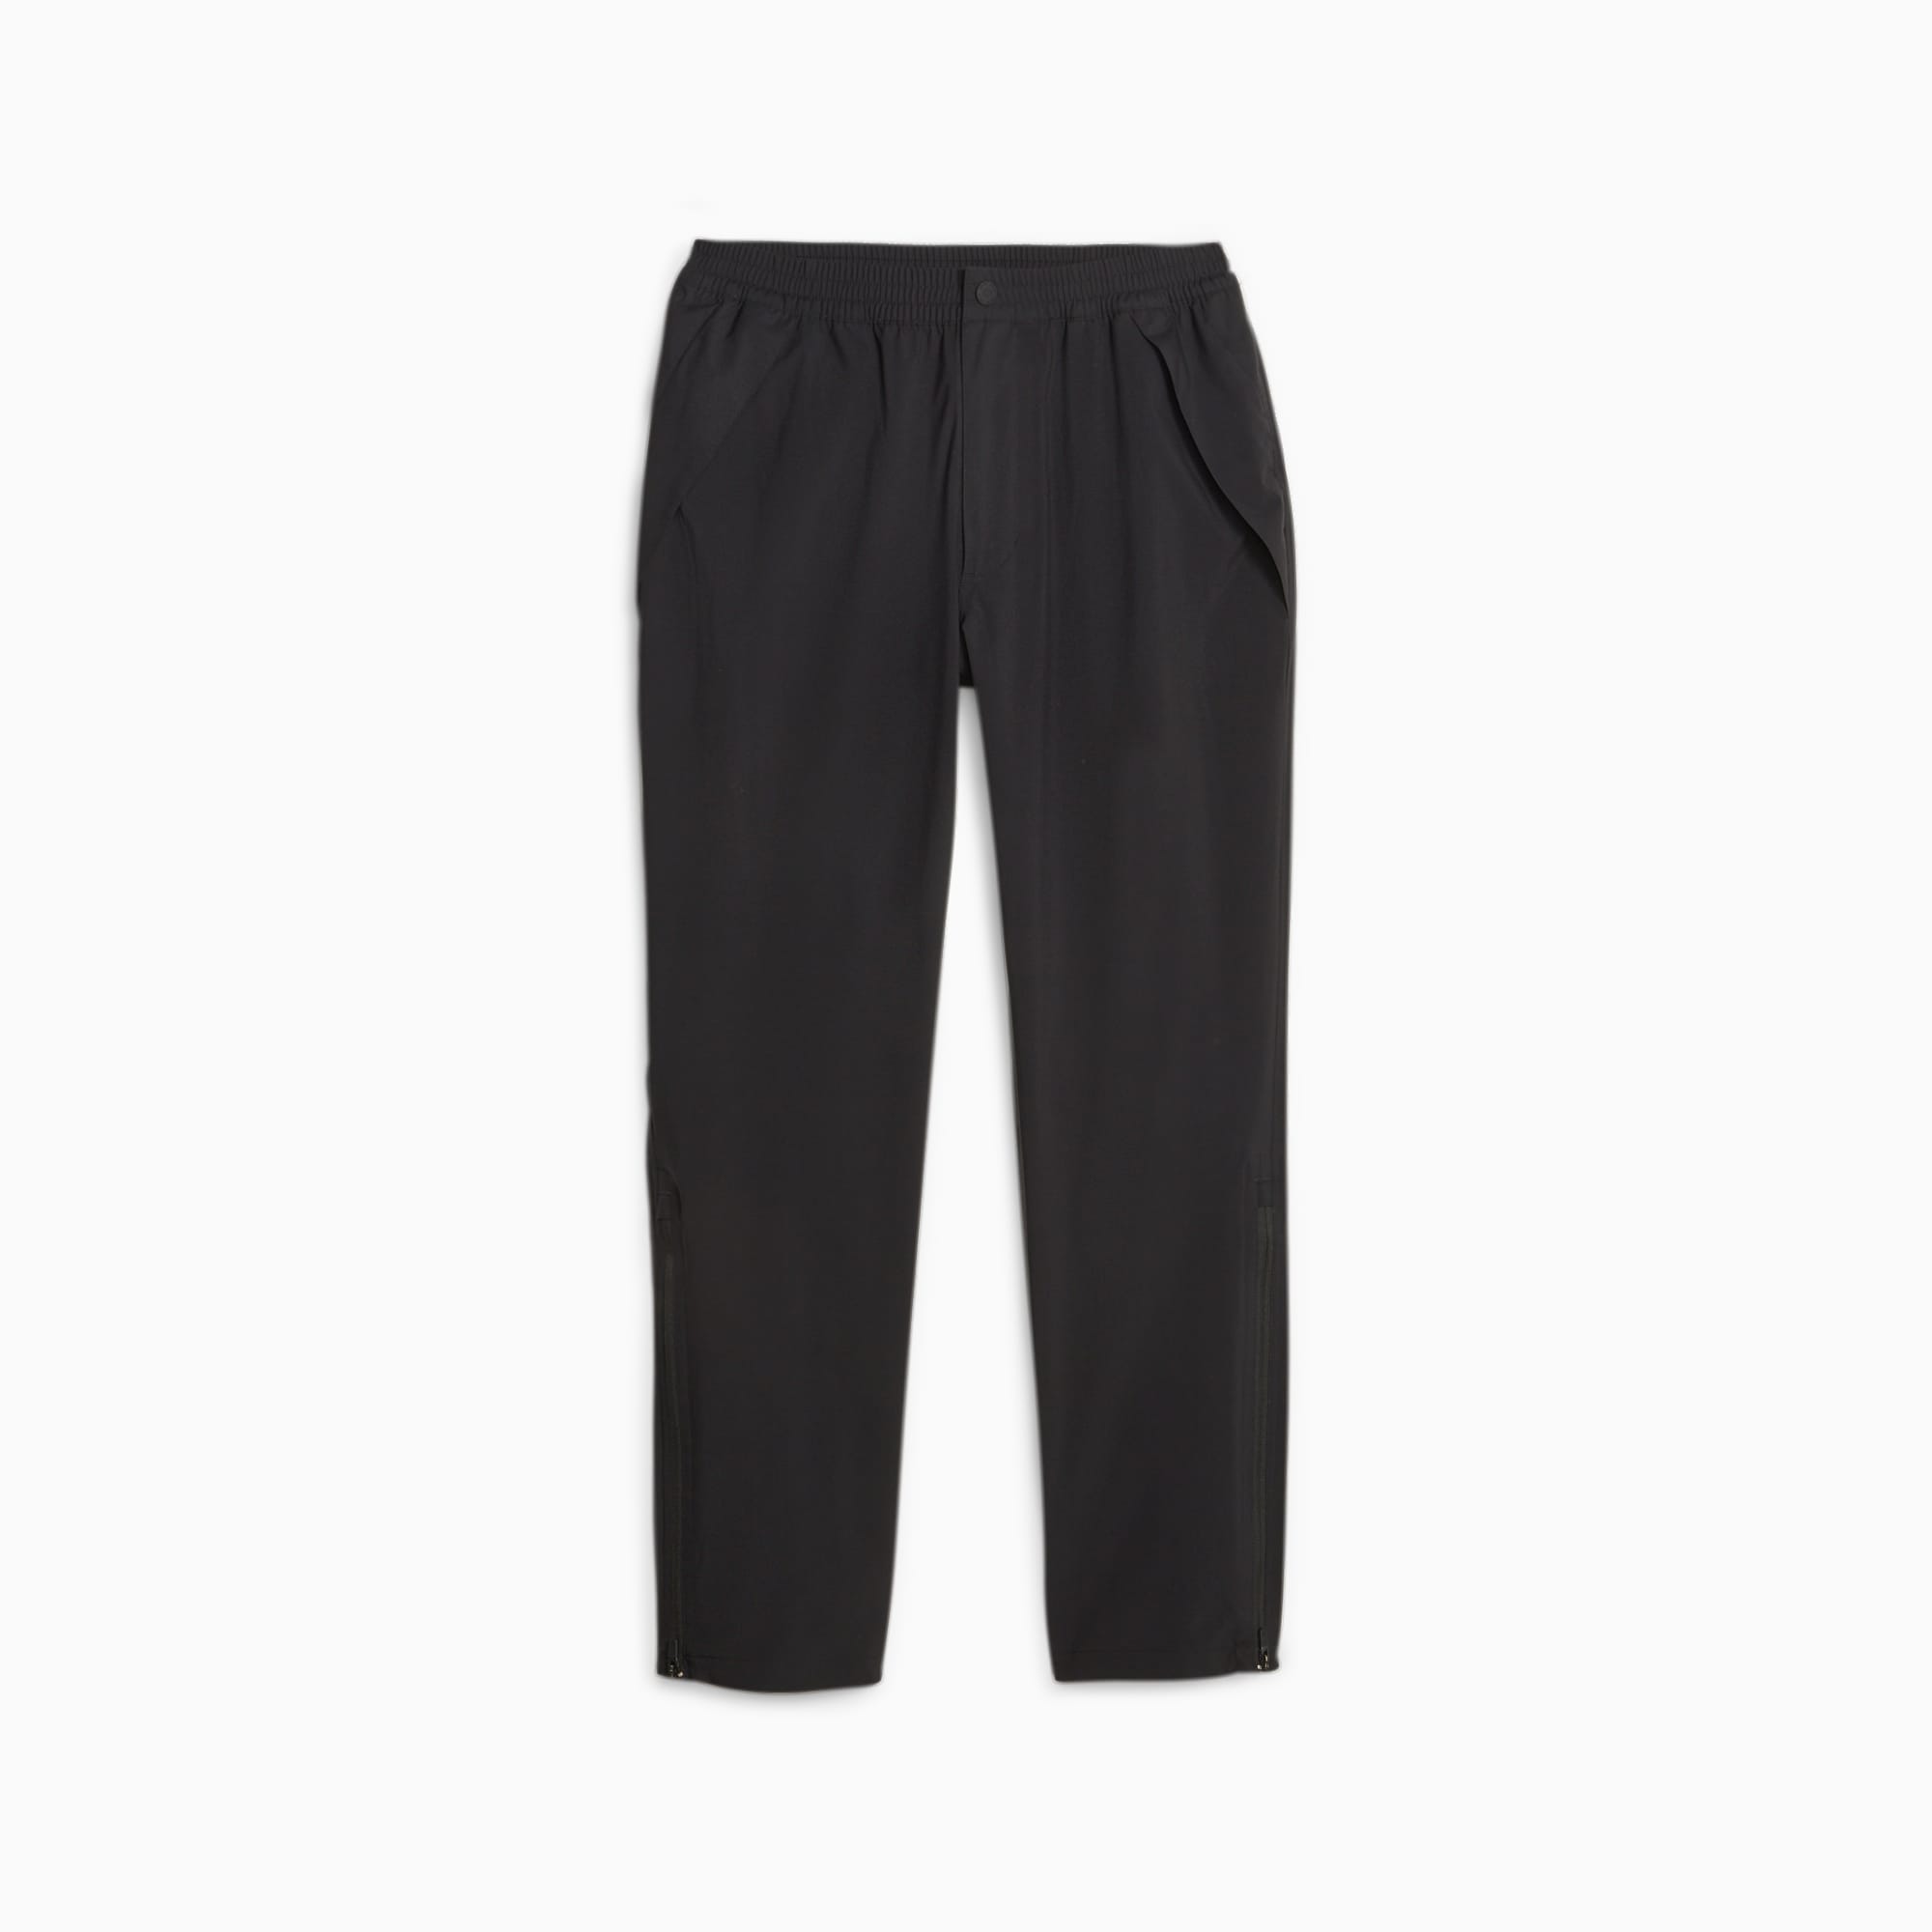 PUMA Drylbl Men's Rain Pants, Black, Size XXL/L, Clothing